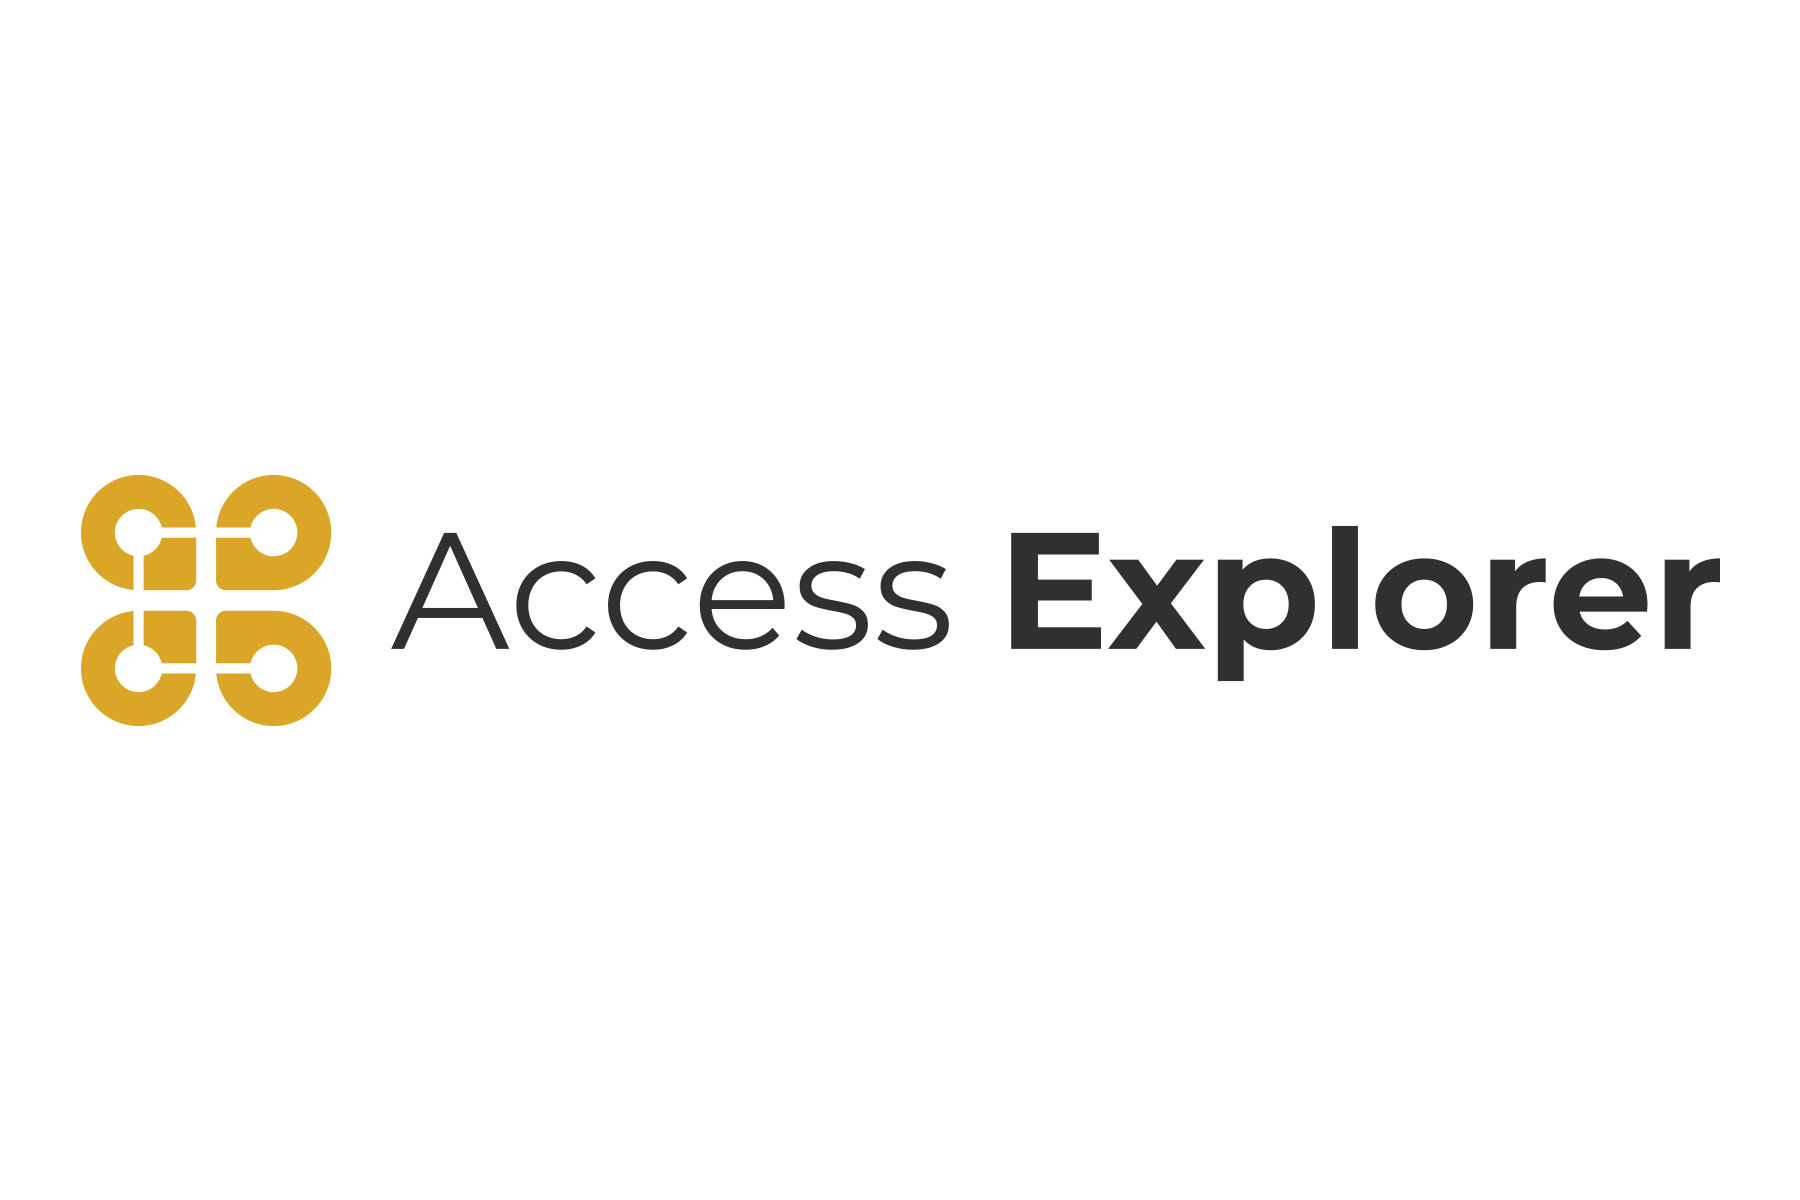 American Printing House / Access Explorer